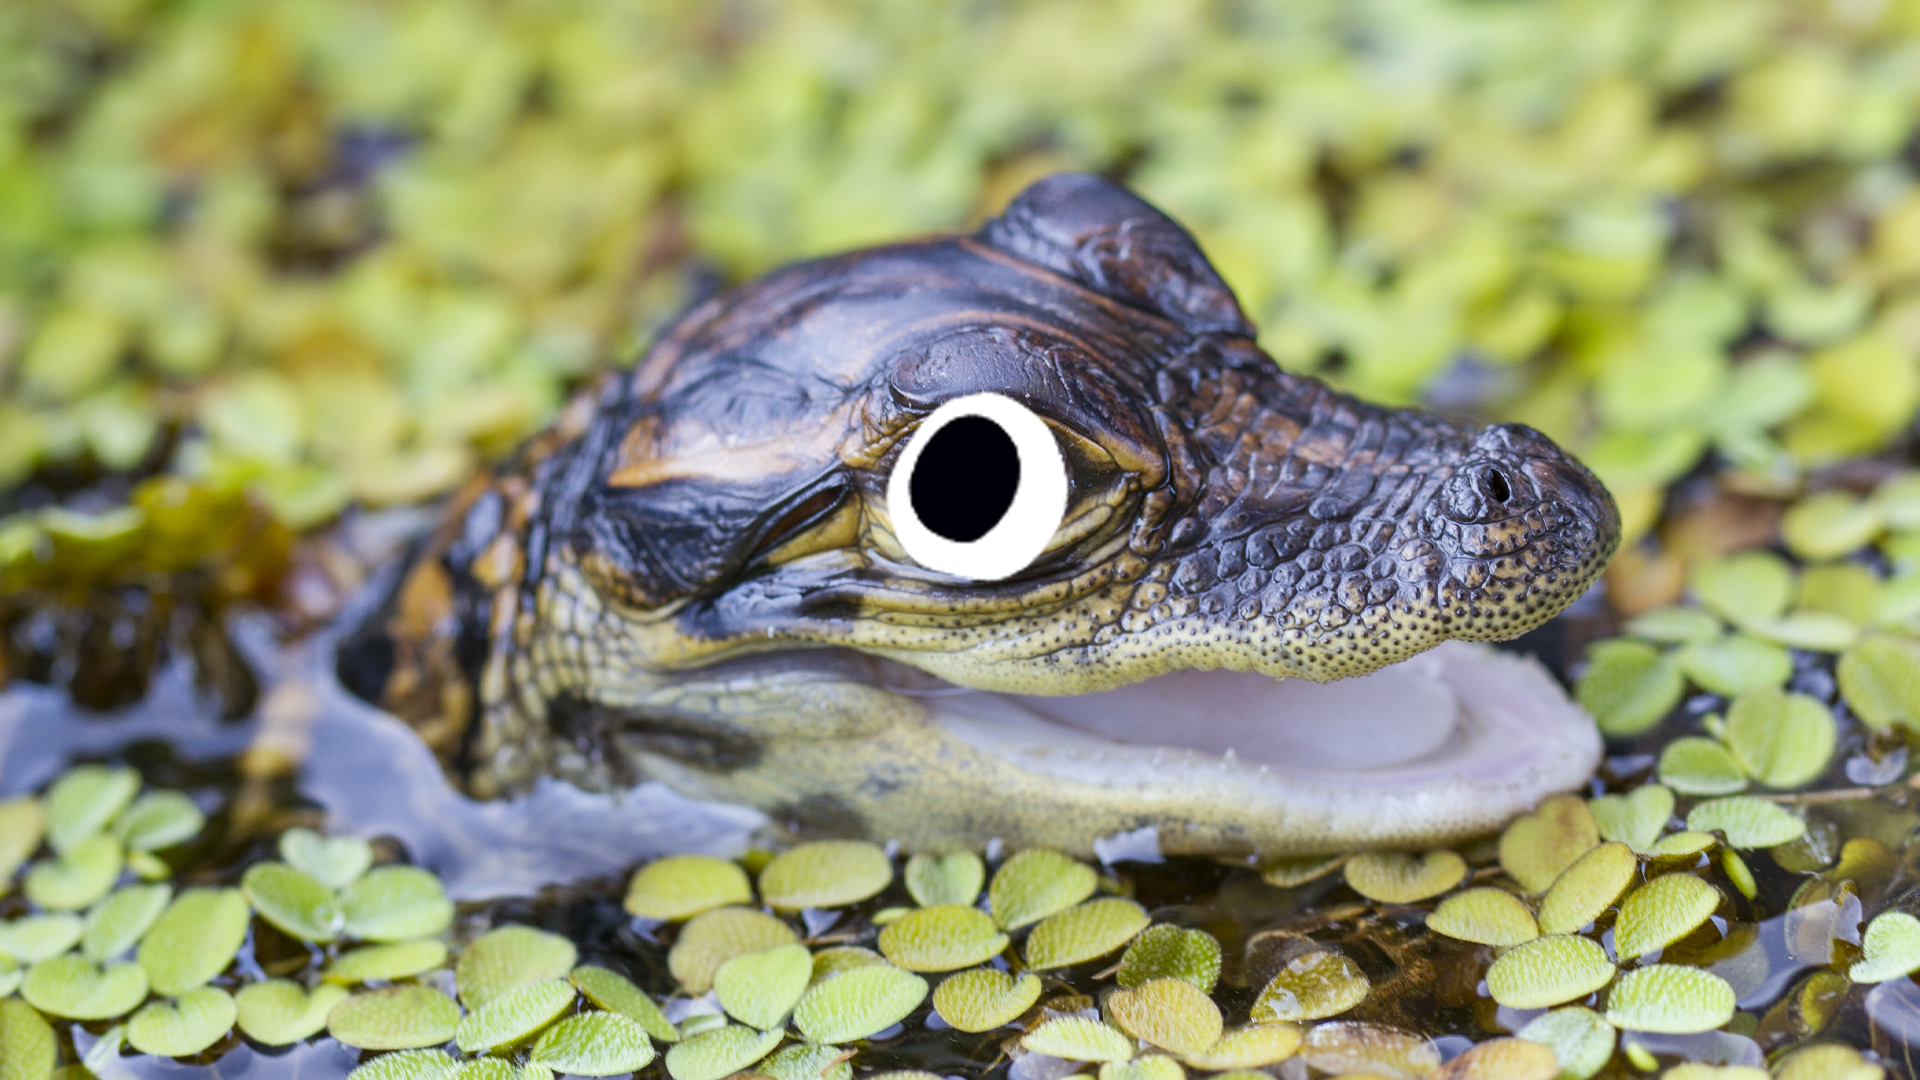 Cute lil croc